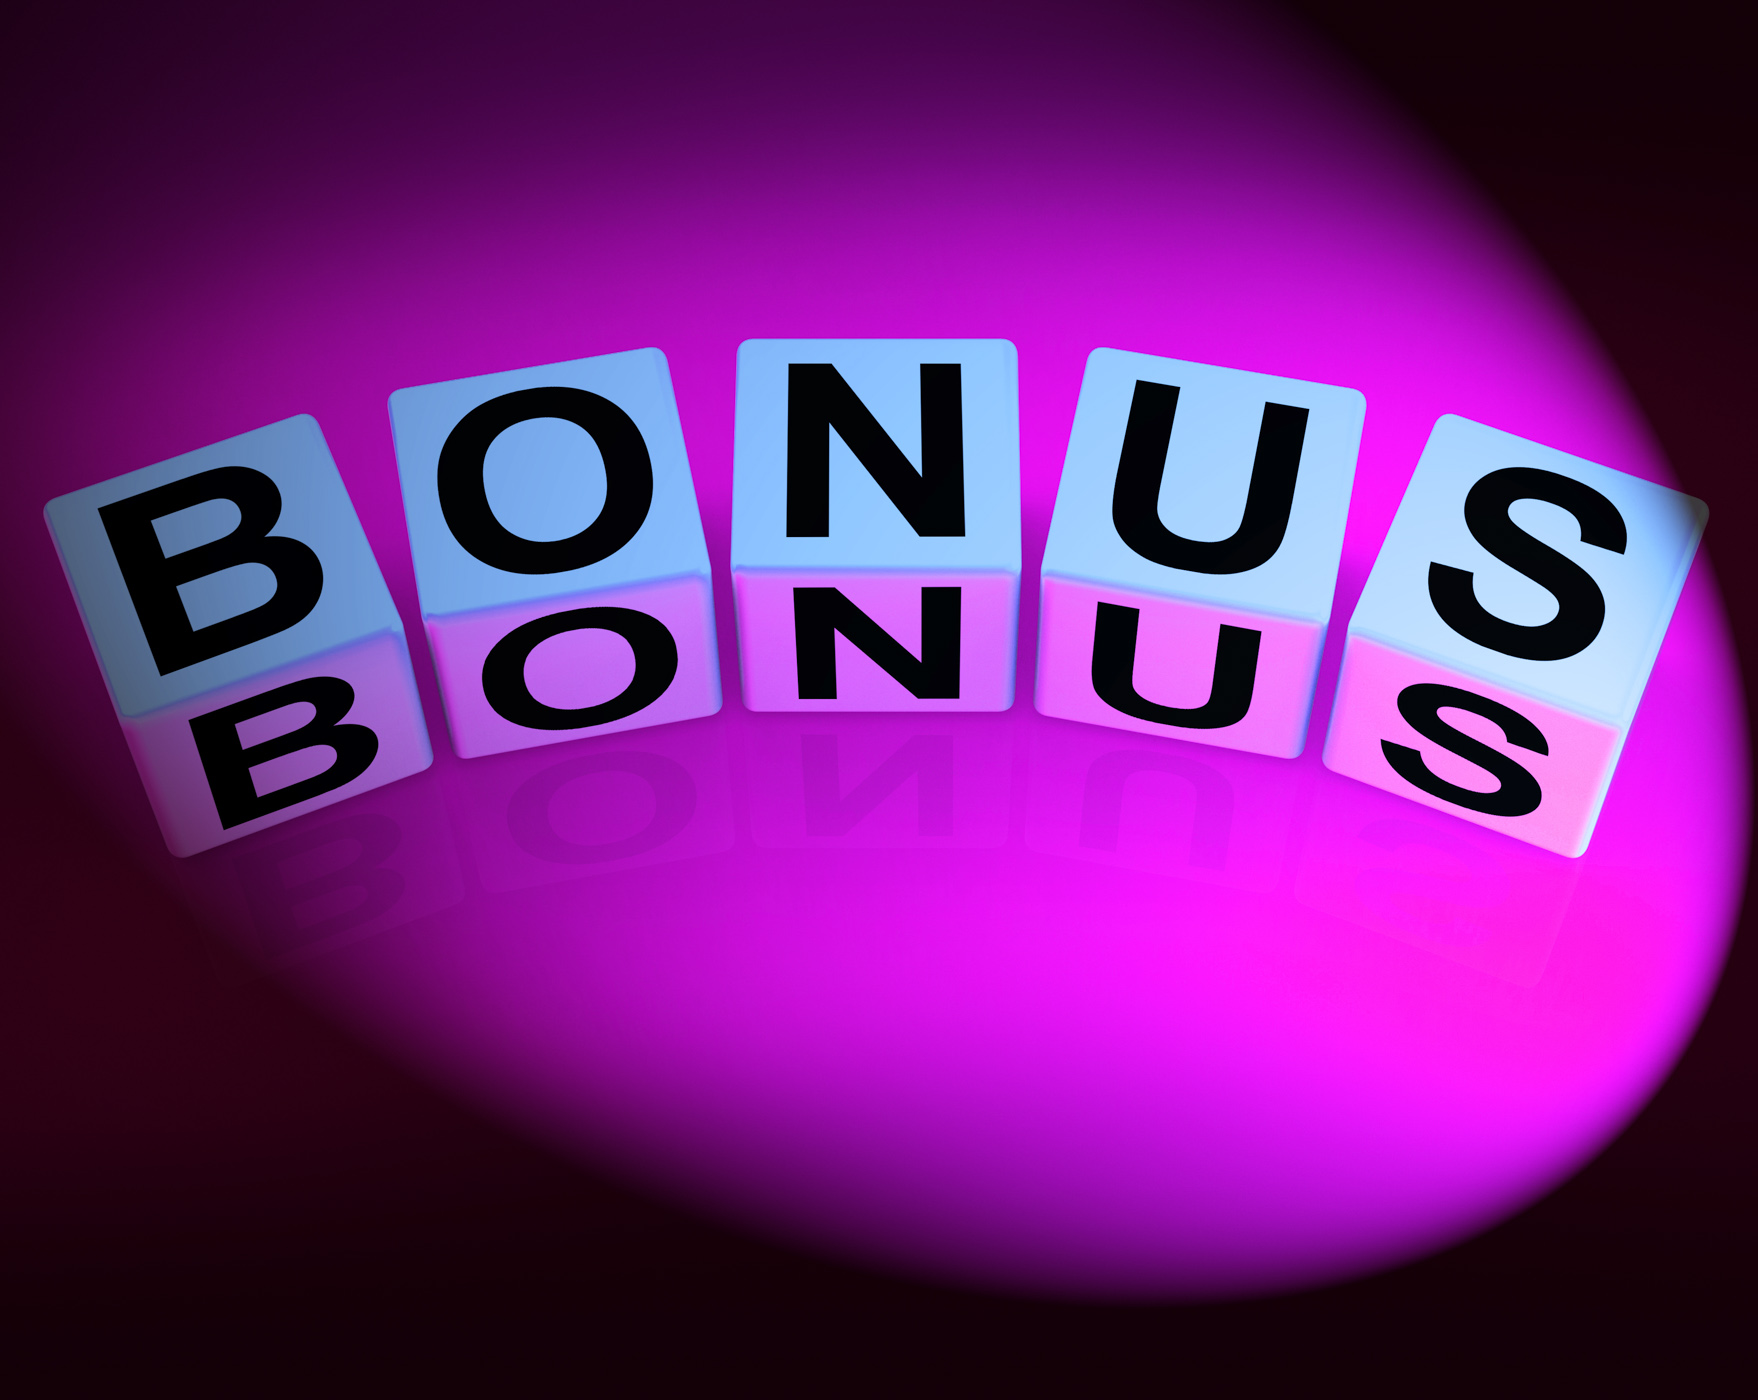 Bonus dice indicate promotional gratuity benefits and bonuses photo